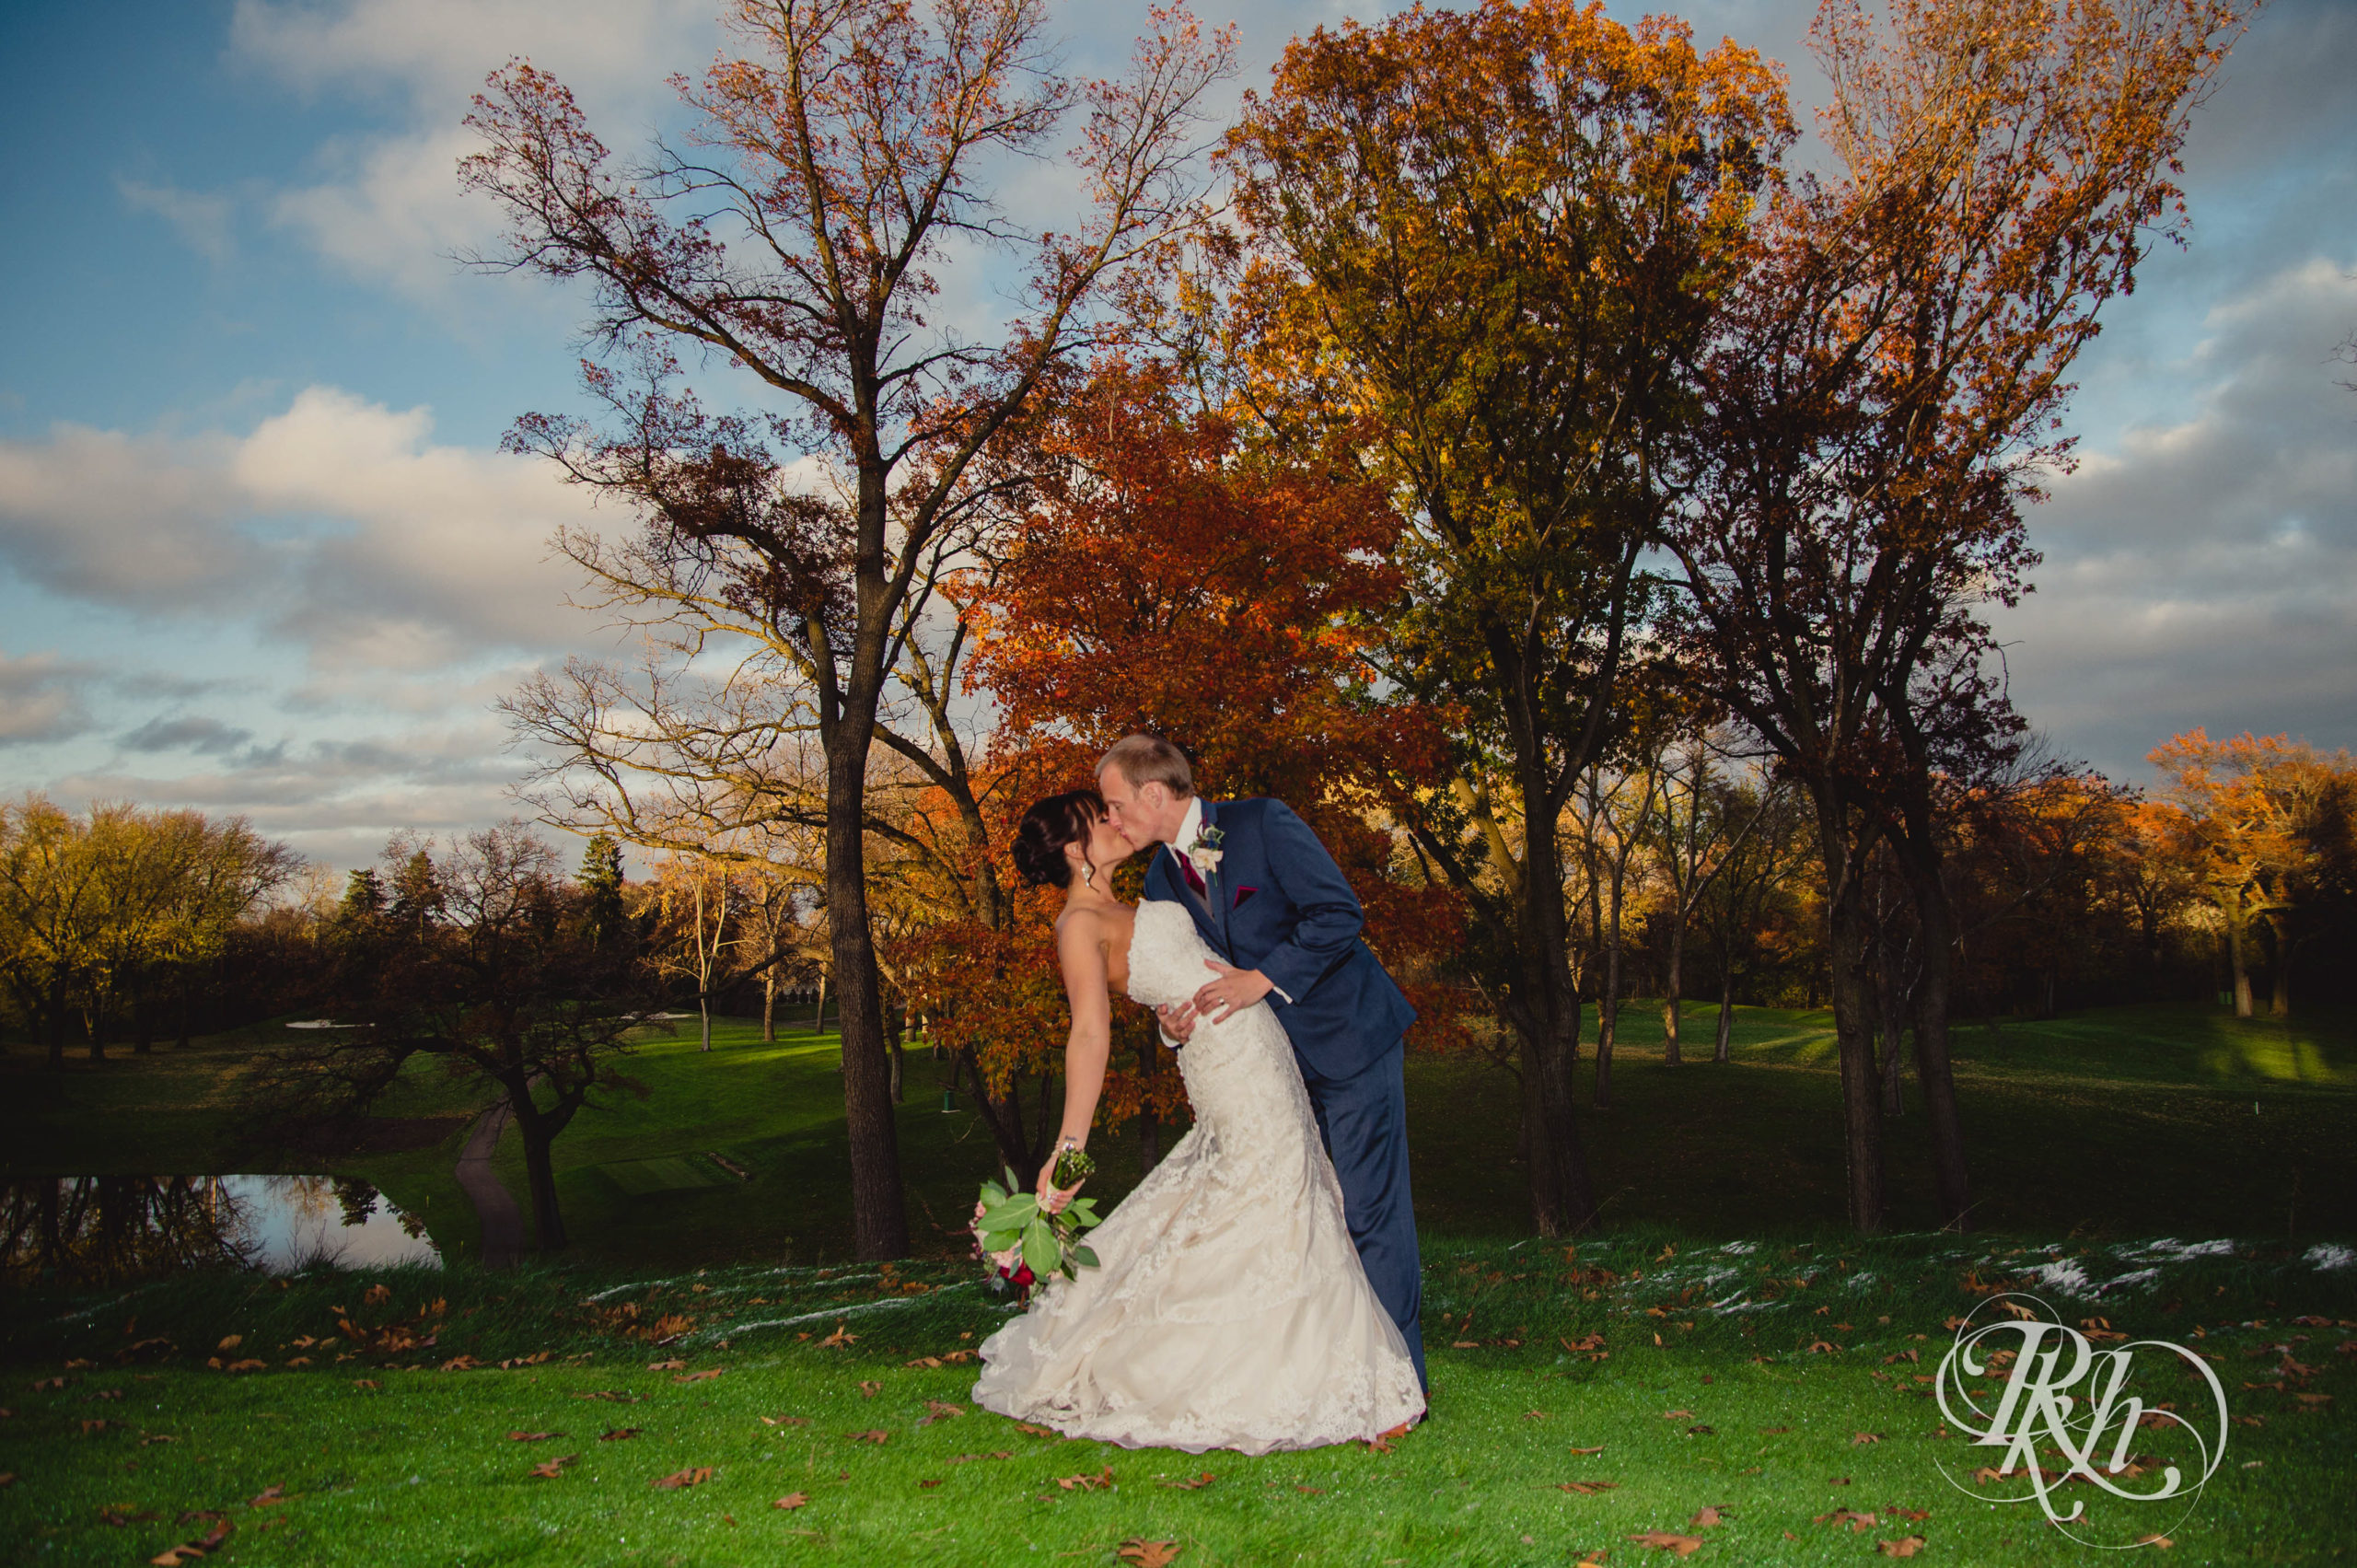 Bride and groom kiss on fall wedding day at Minneapolis Golf Club in Minneapolis, Minnesota.